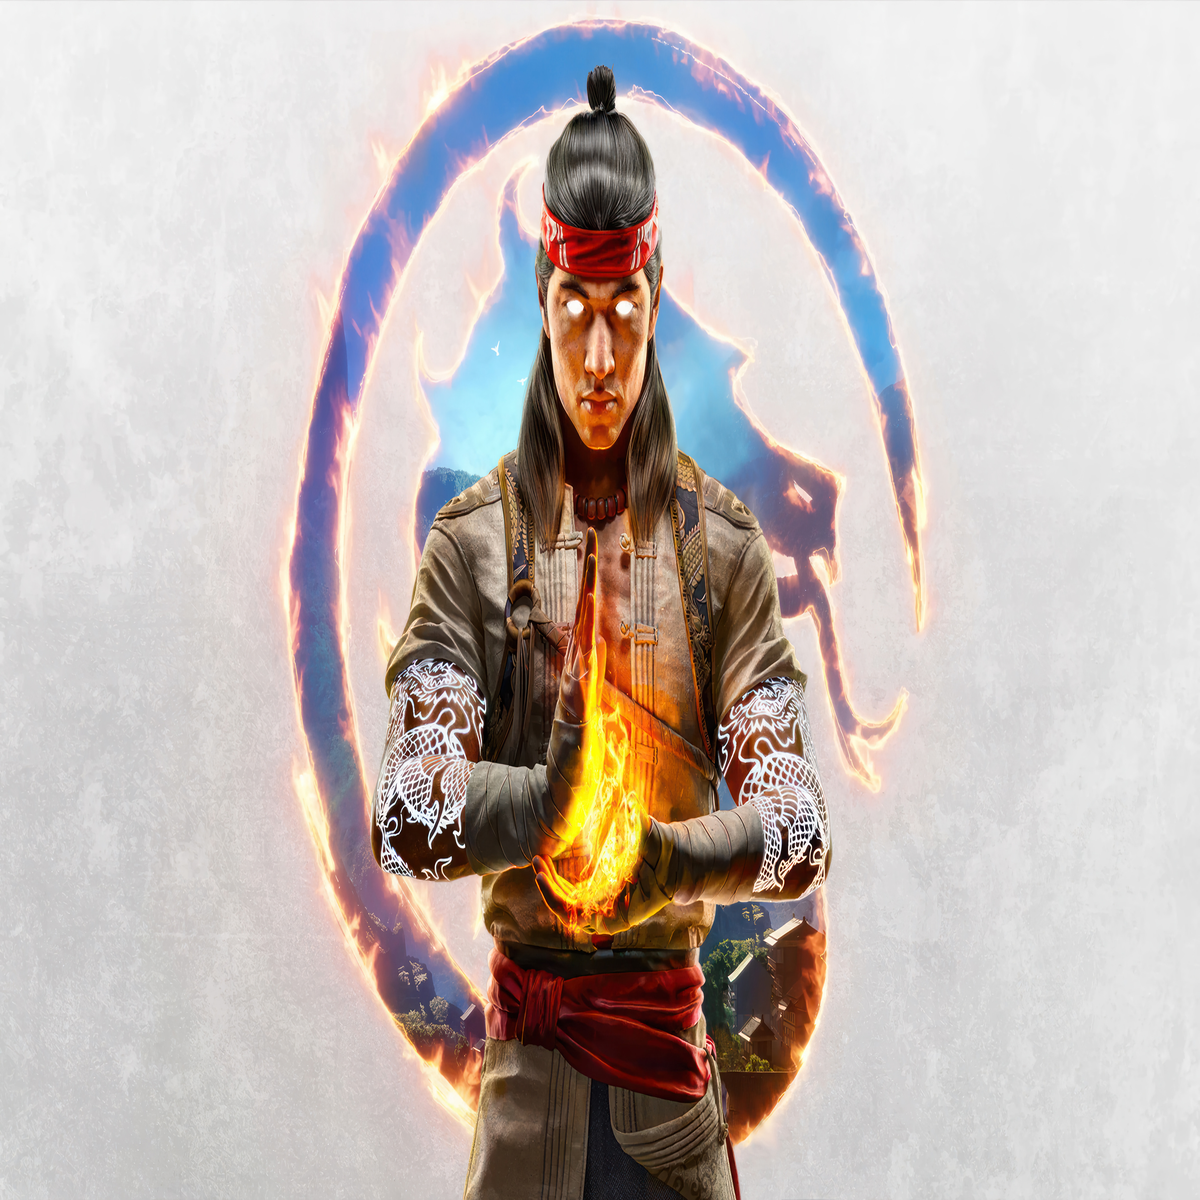 Mortal Kombat 1 recebe novos personagens - Olhar Digital